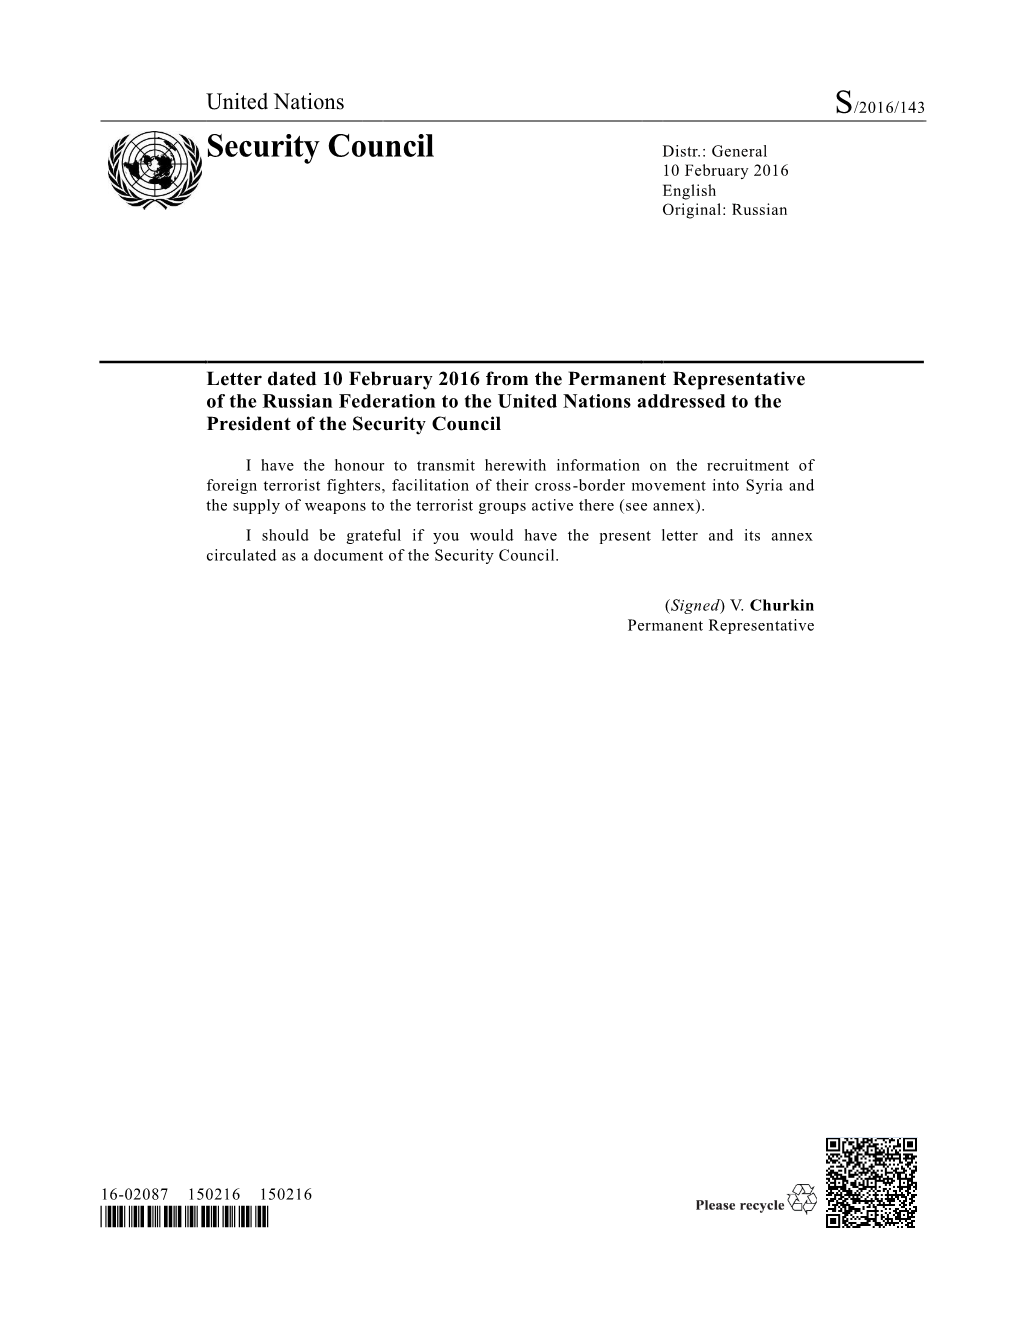 Security Council Distr.: General 10 February 2016 English Original: Russian